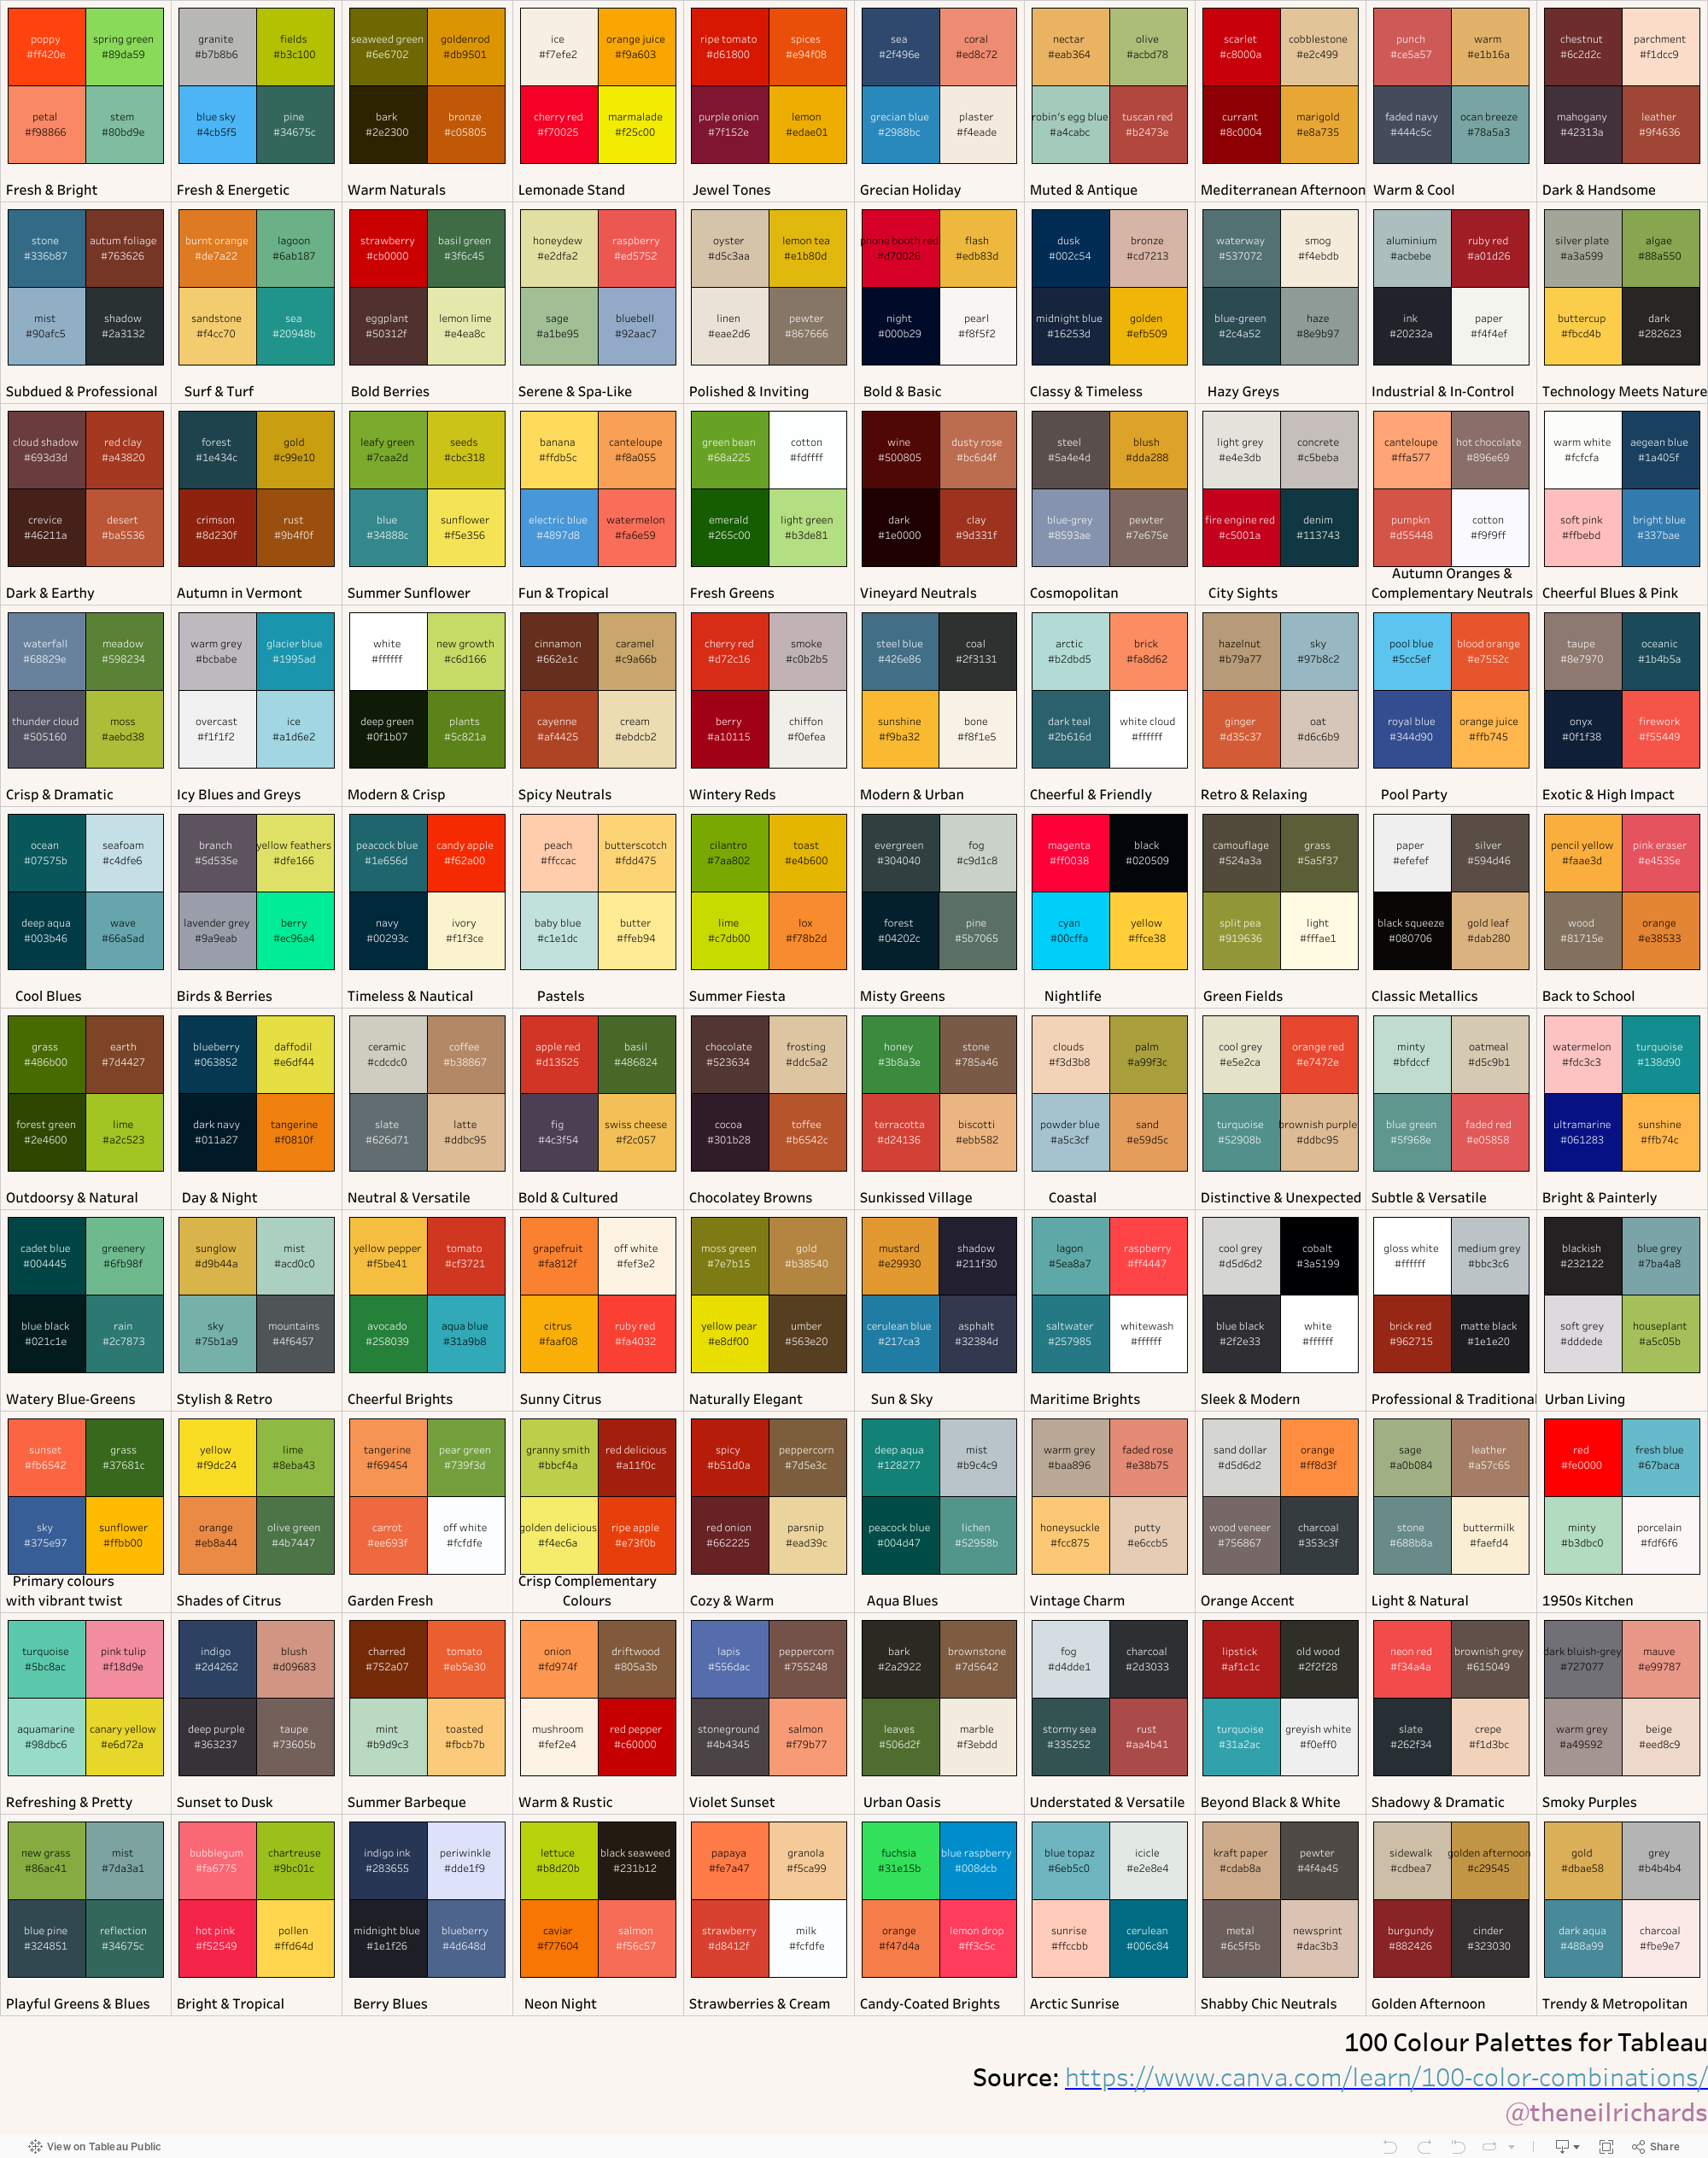 tableau public add shape palette download